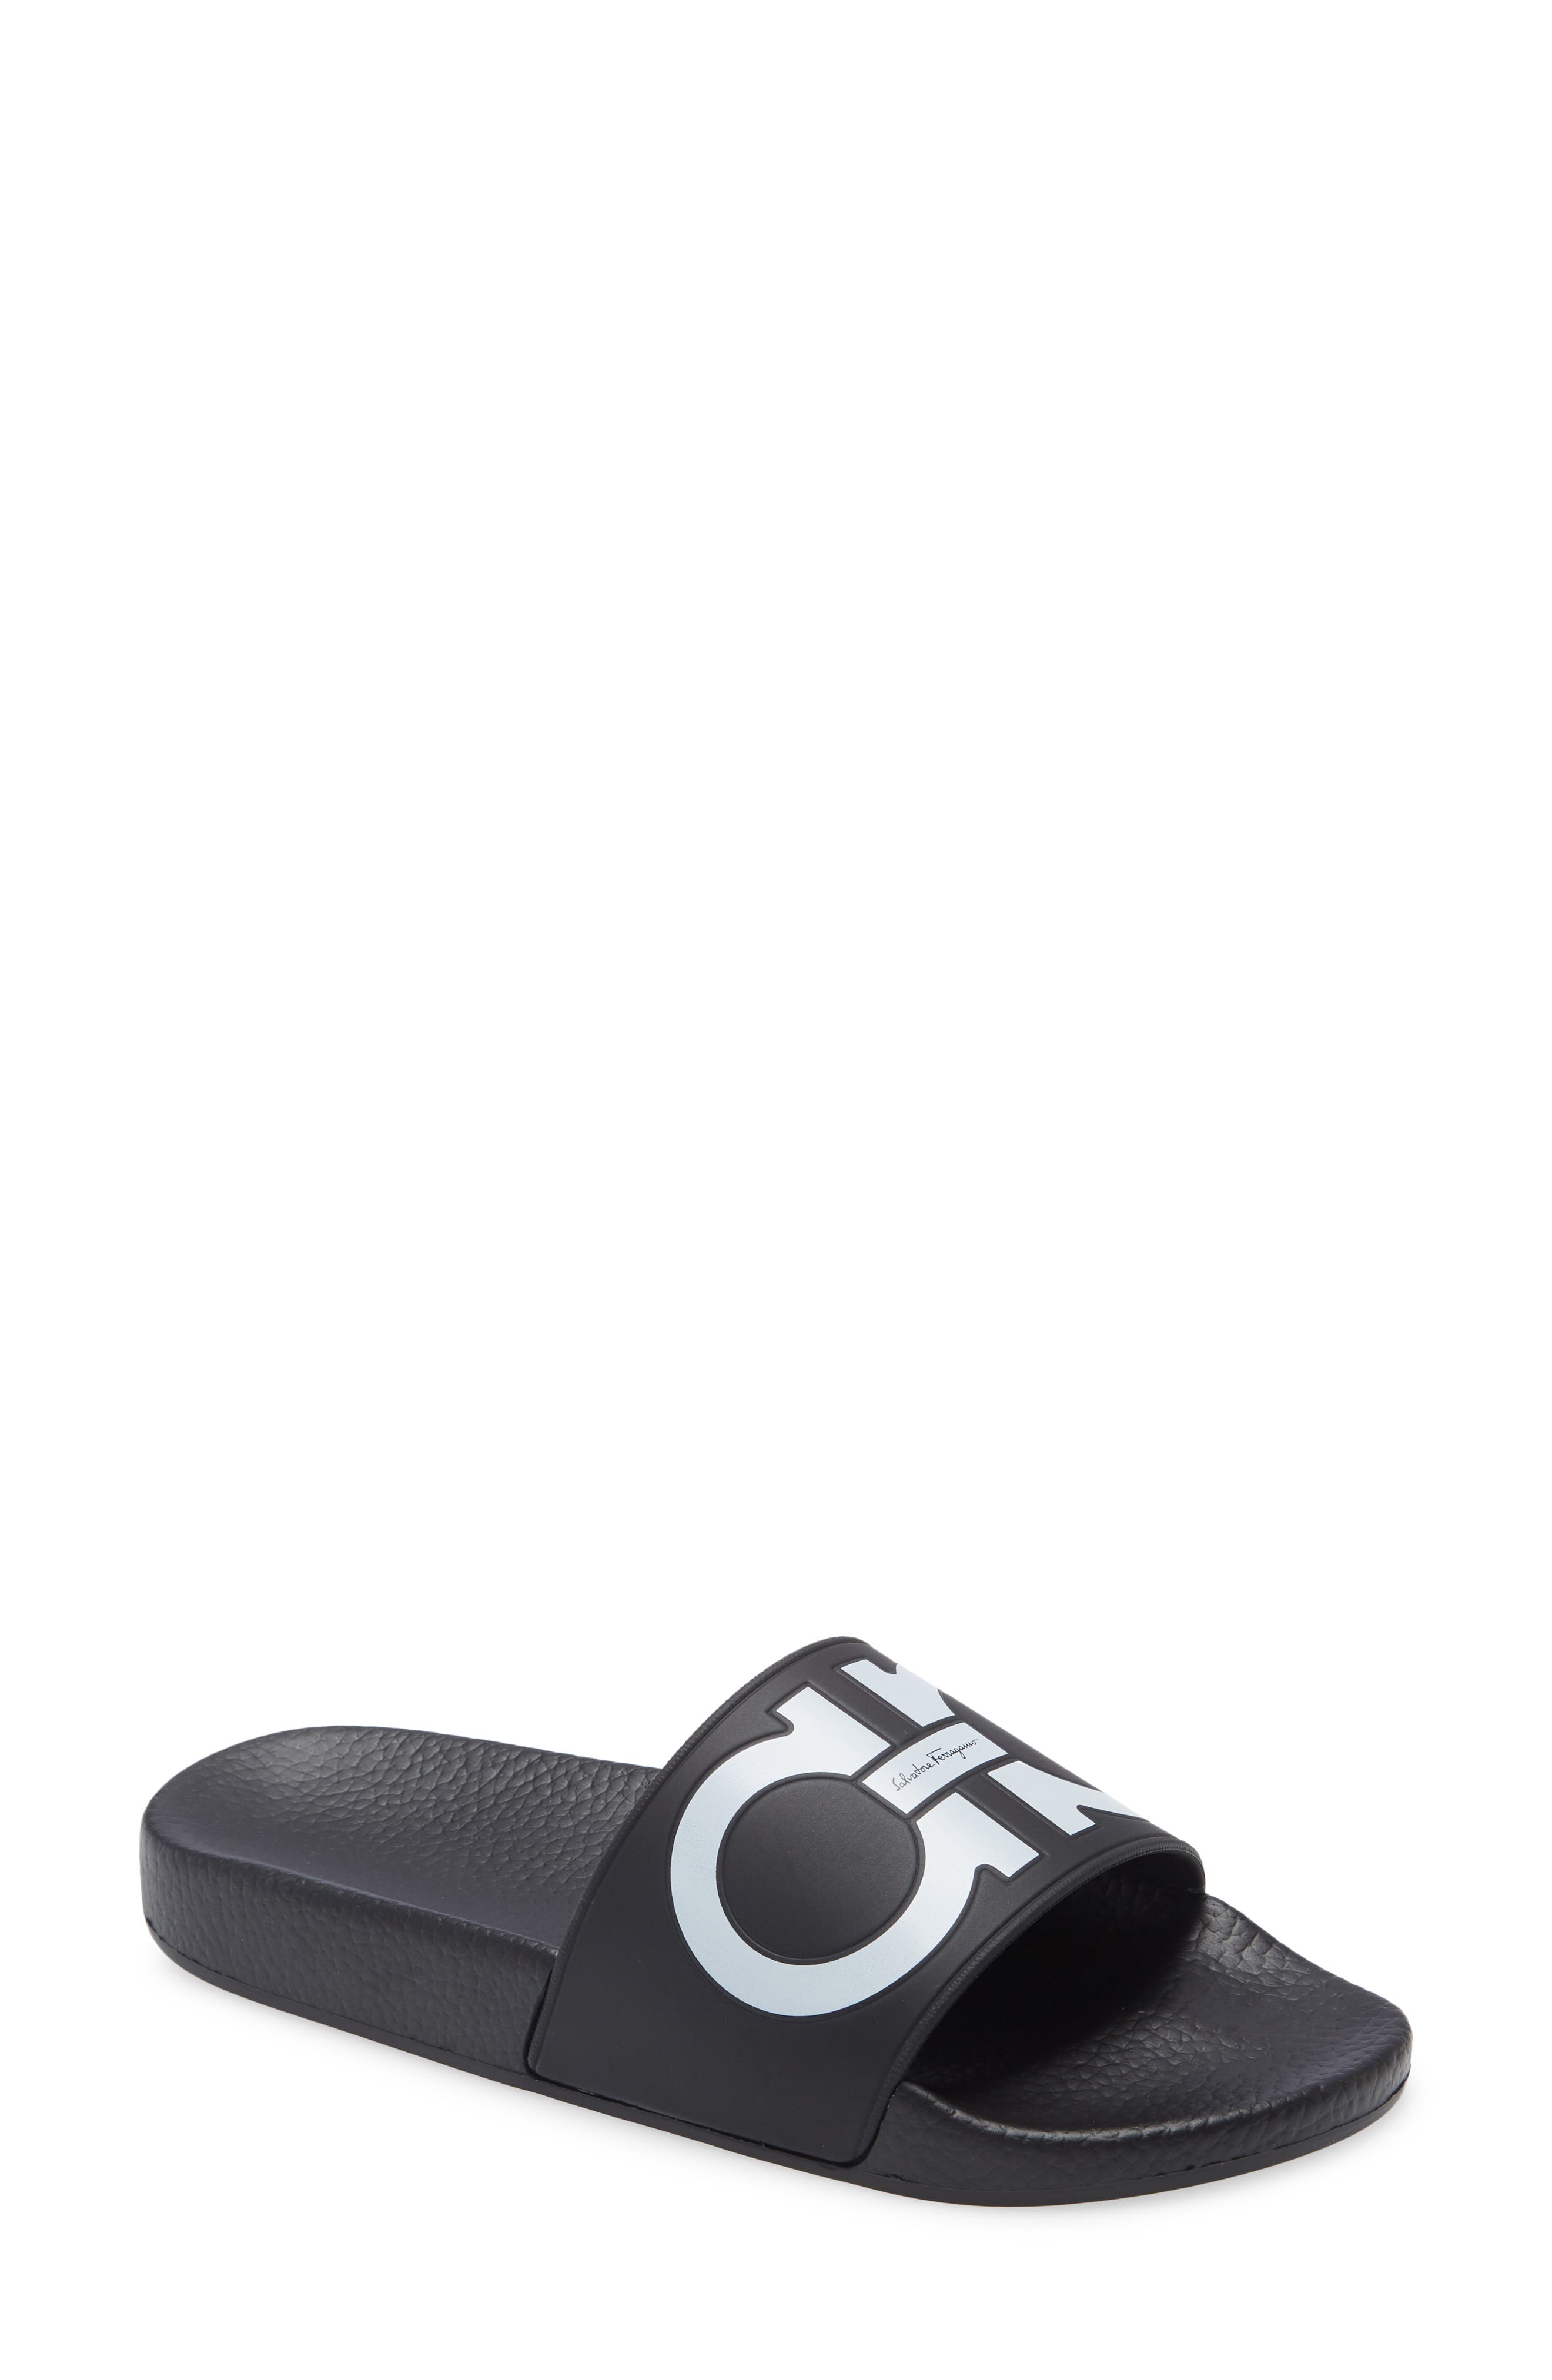 Salvatore Ferragamo Groovy 6 Sport Slide Sandal in Black/White at Nordstrom, Size 11